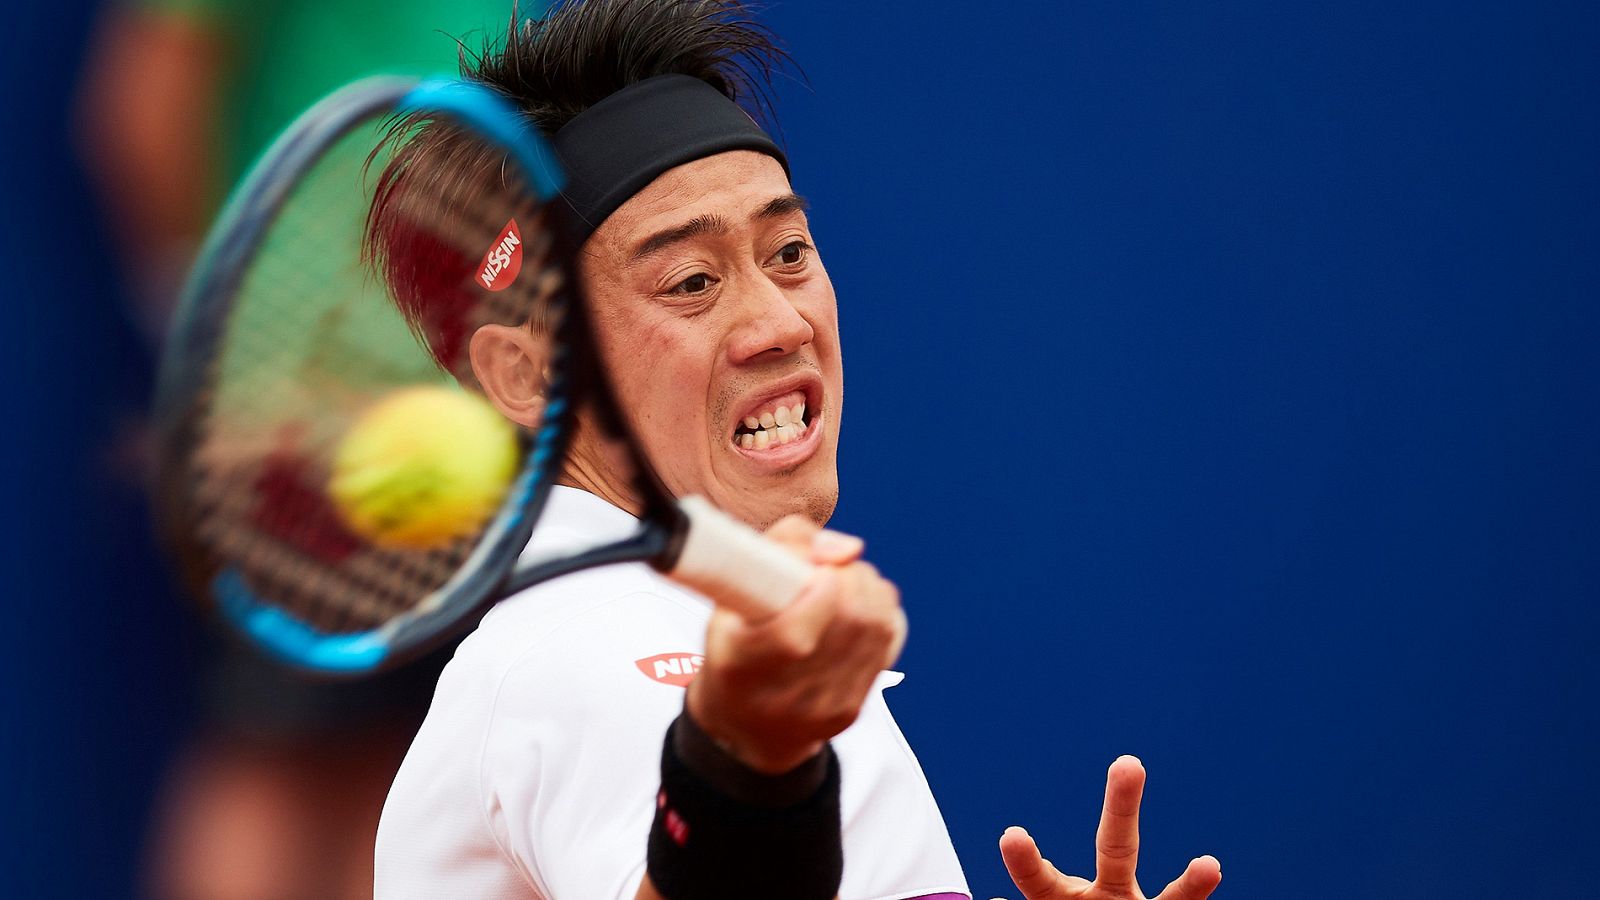 El tenista japonés Kei Nishikori.